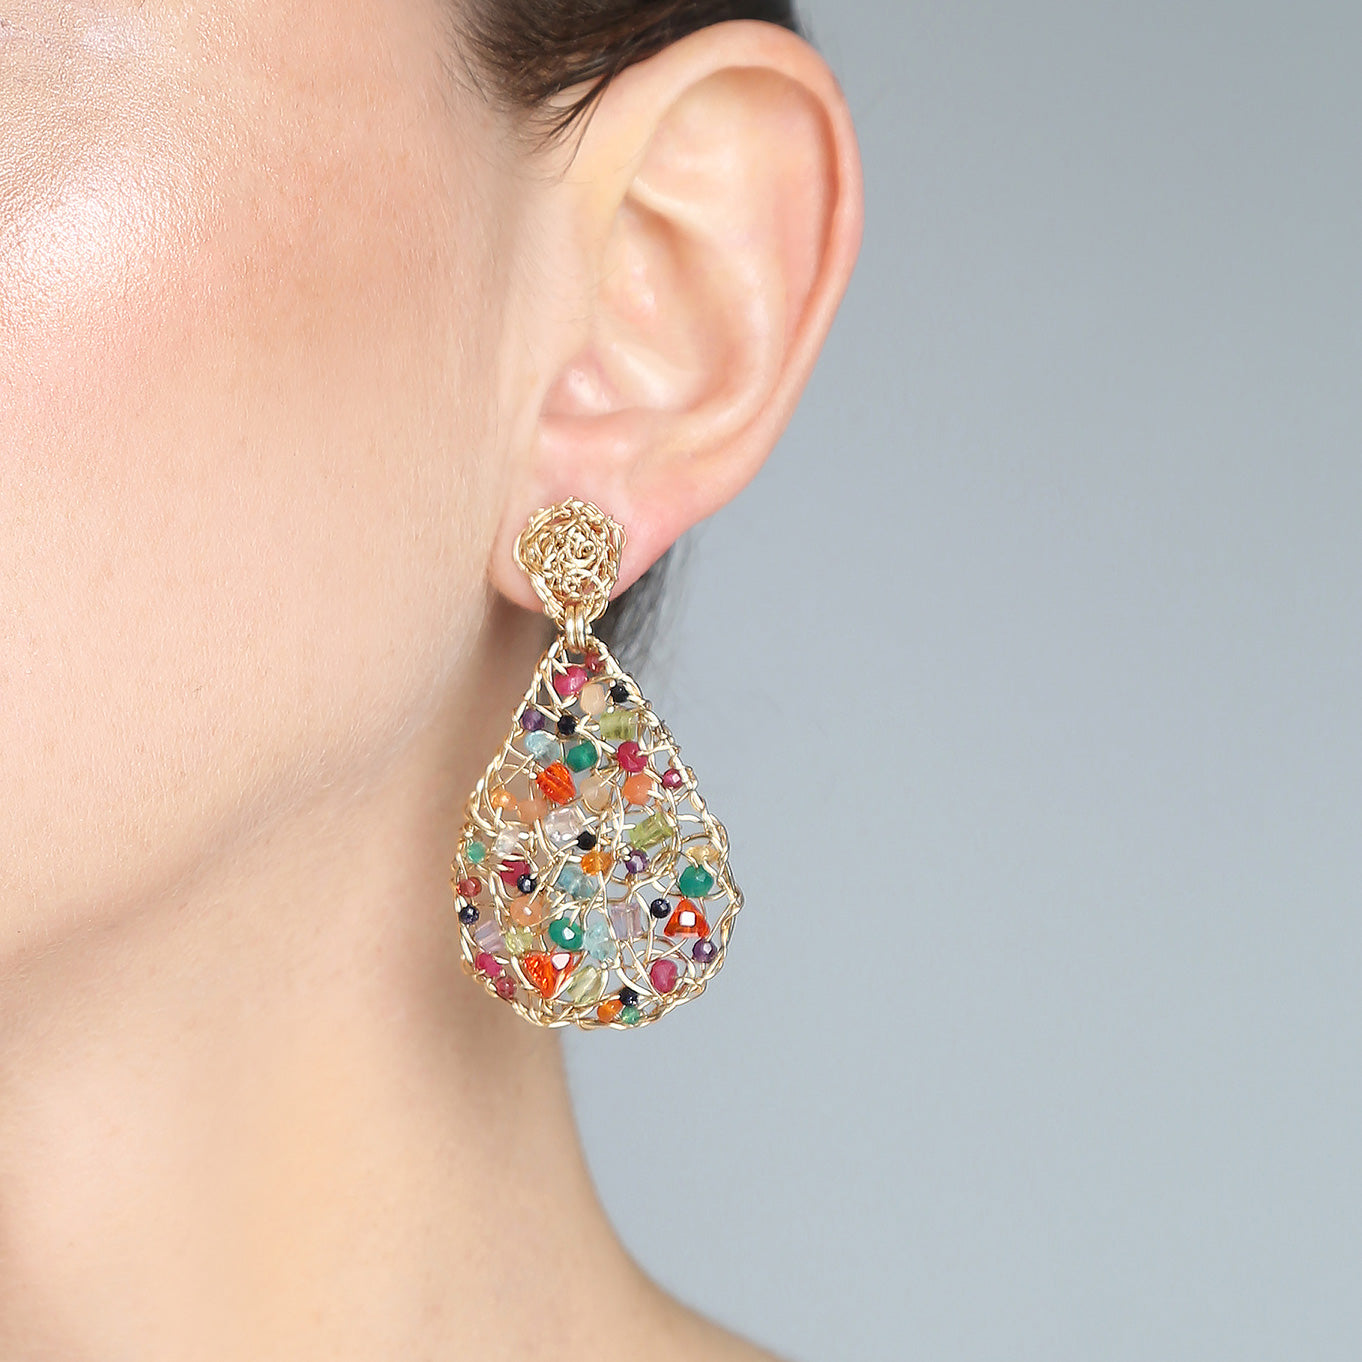 Gota Button Dangle Earringss (40mm) - Multicolor Gems Mix Earrings TARBAY   